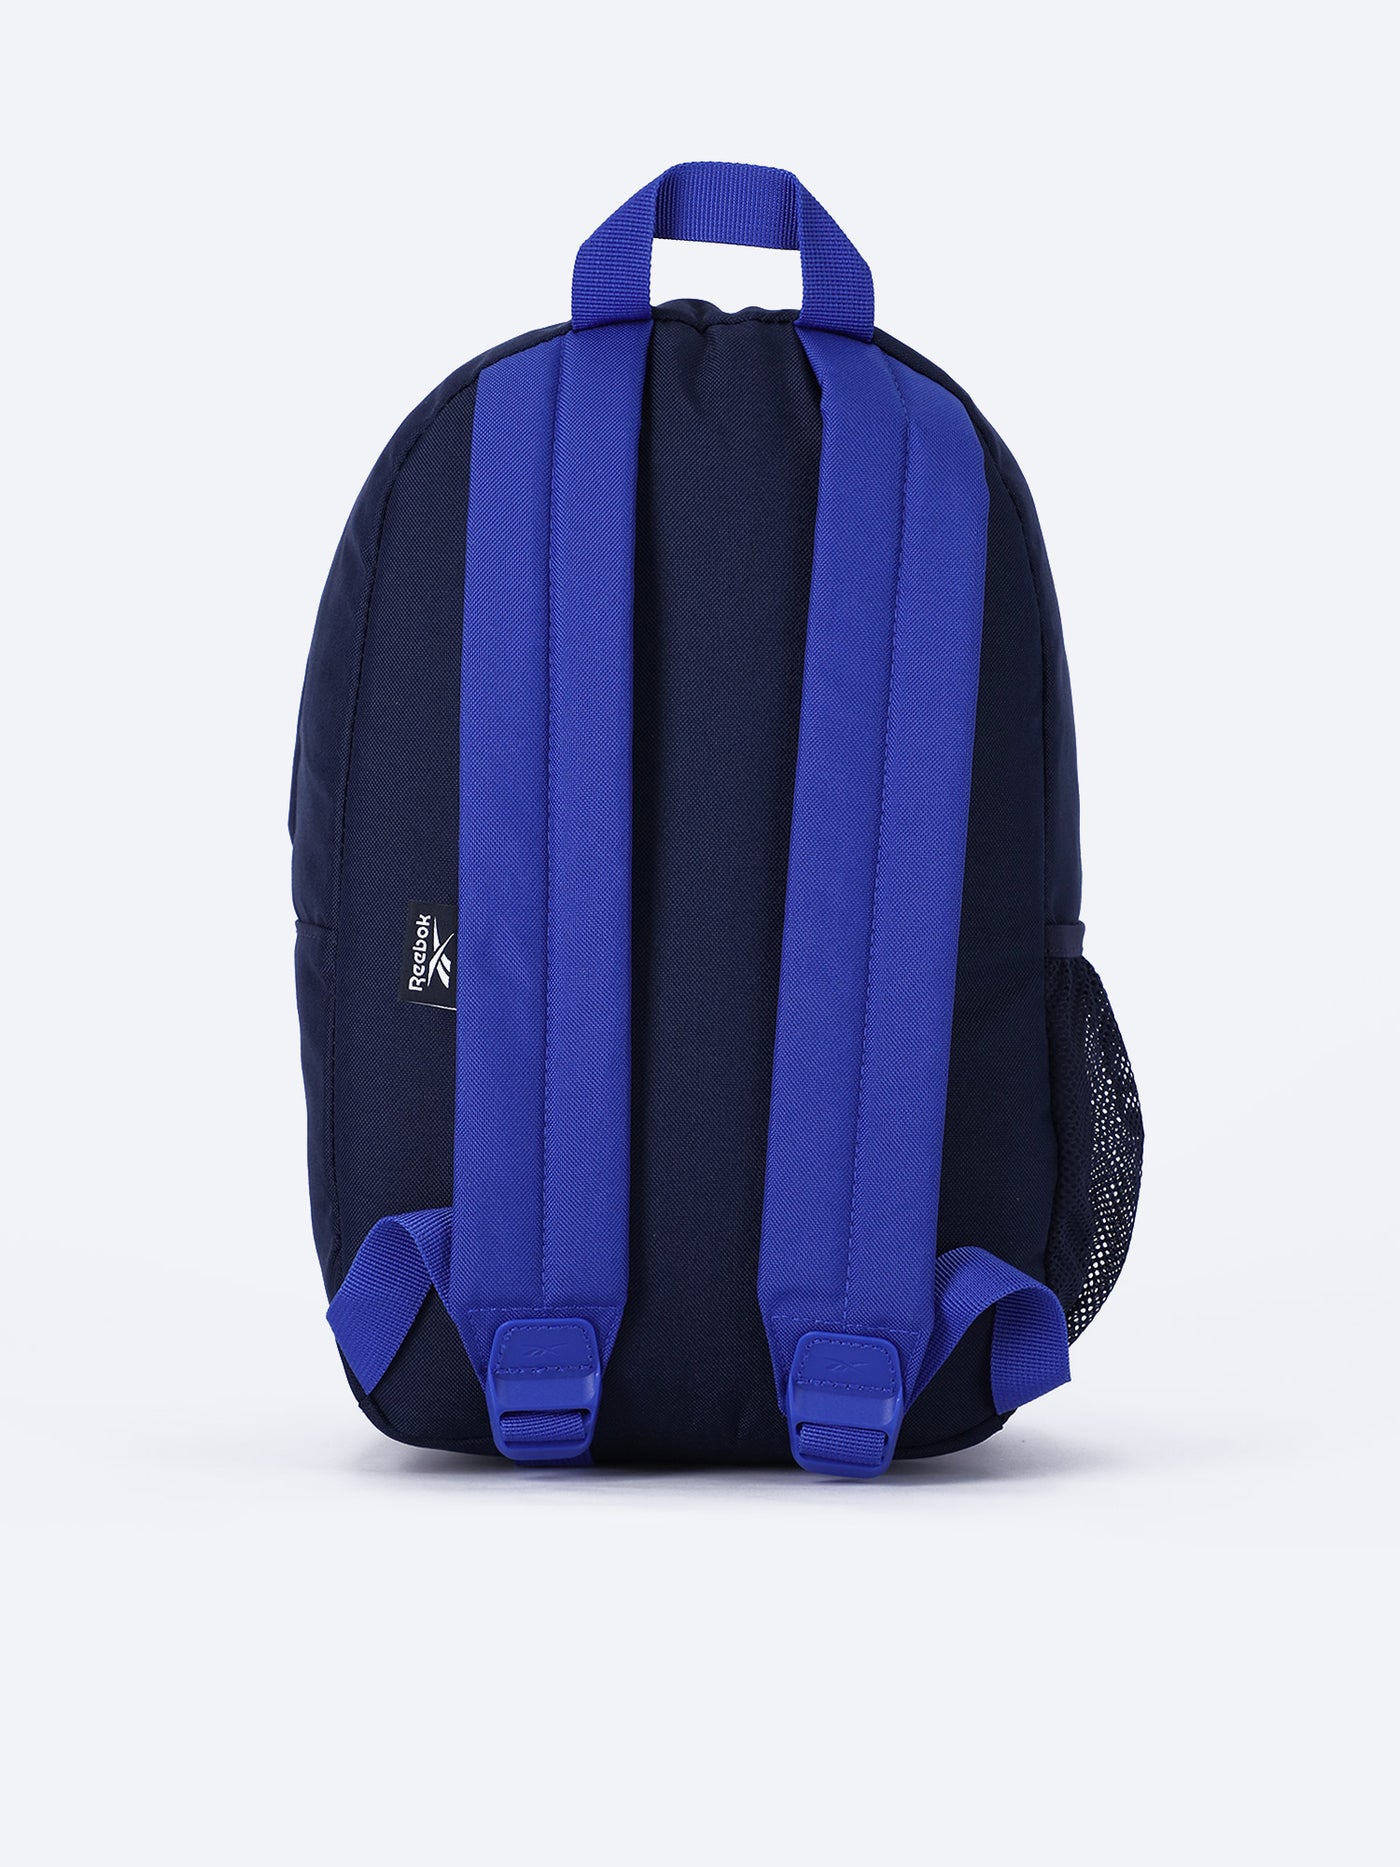 Reebok Kids Unisex Pencil Case Backpack - H36589